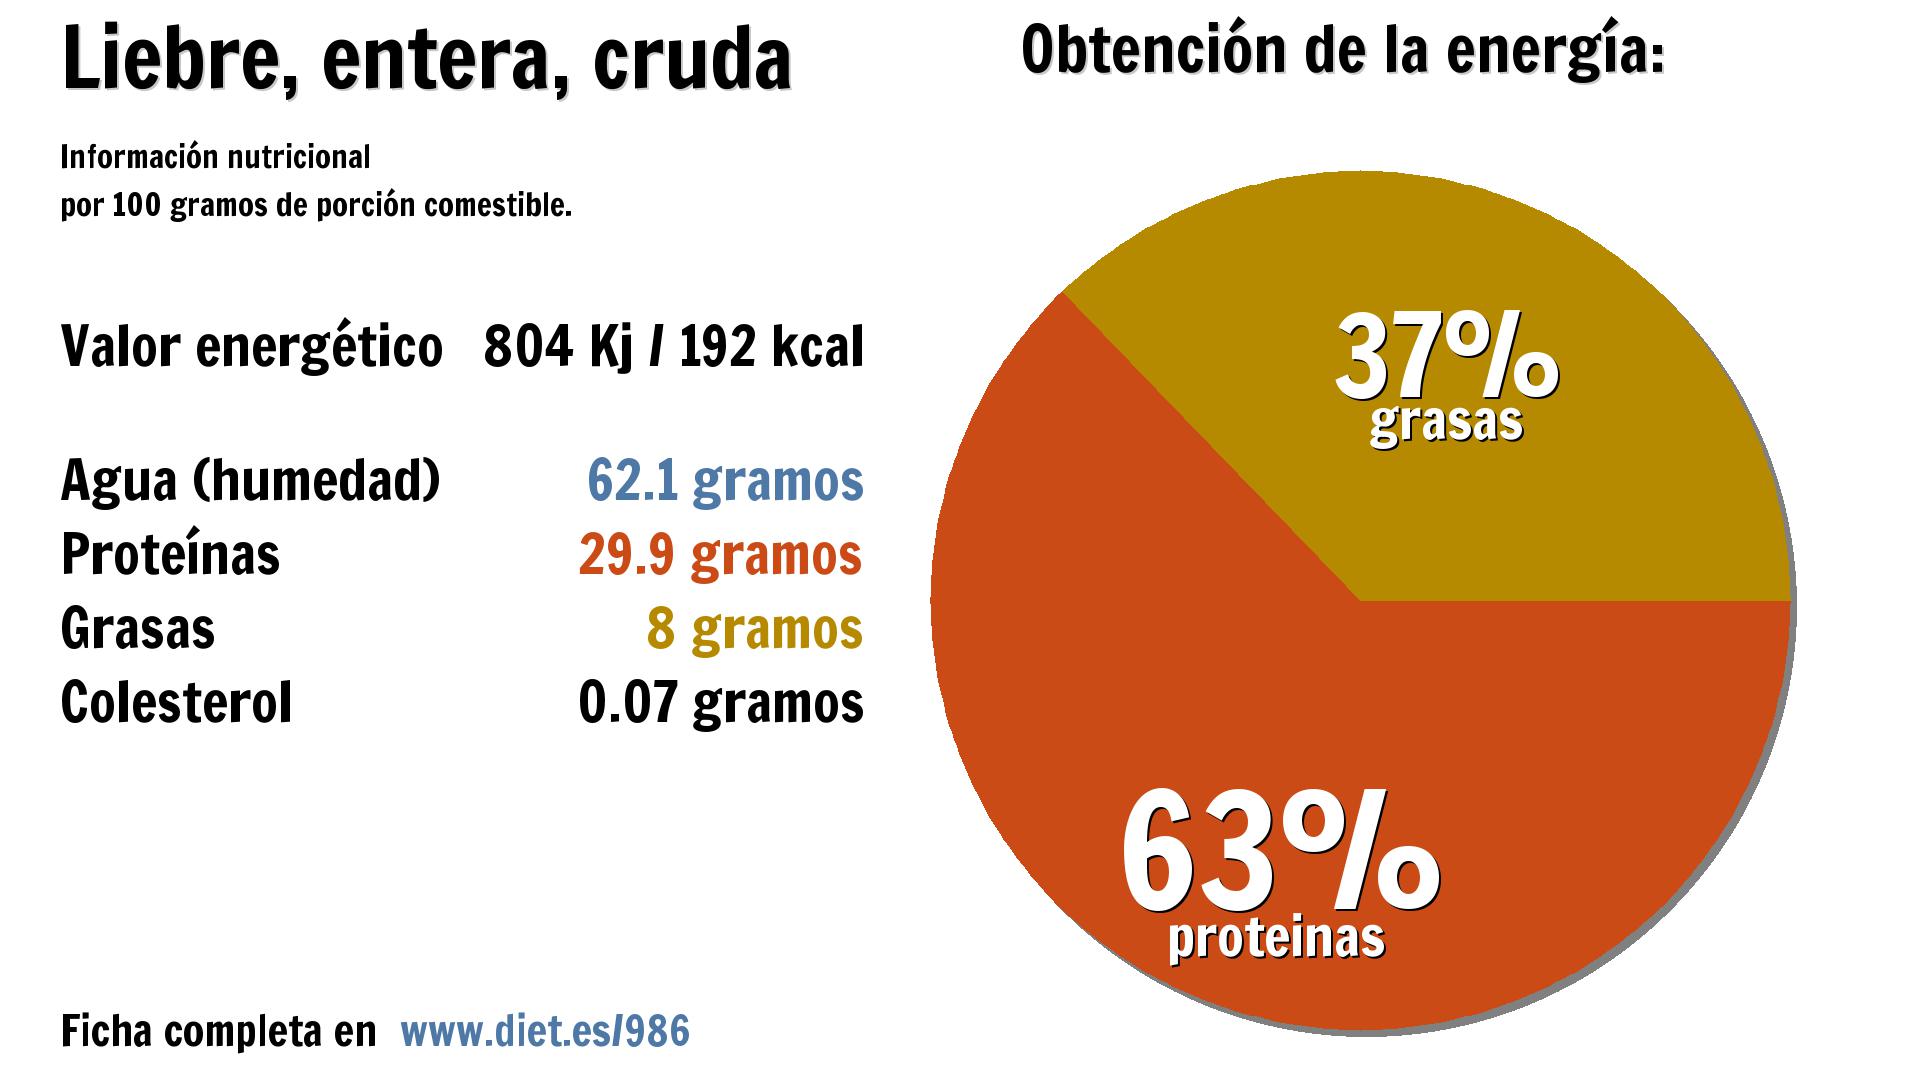 Liebre, entera, cruda: energía 804 Kj, agua 62 g., proteínas 30 g. y grasas 8 g.